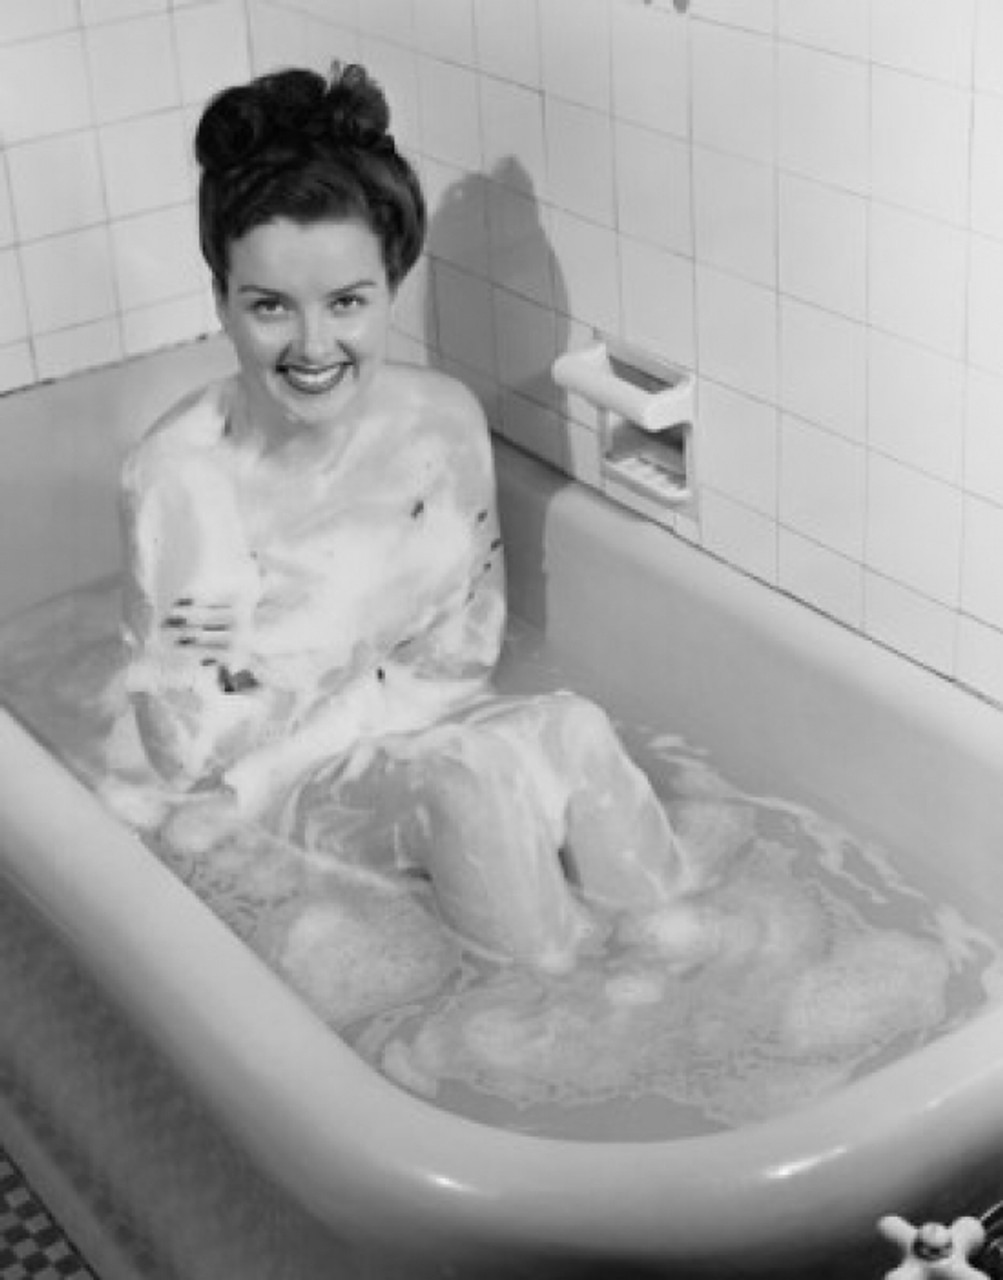 Young woman taking bath Poster Print - Item # VARSAL255418730